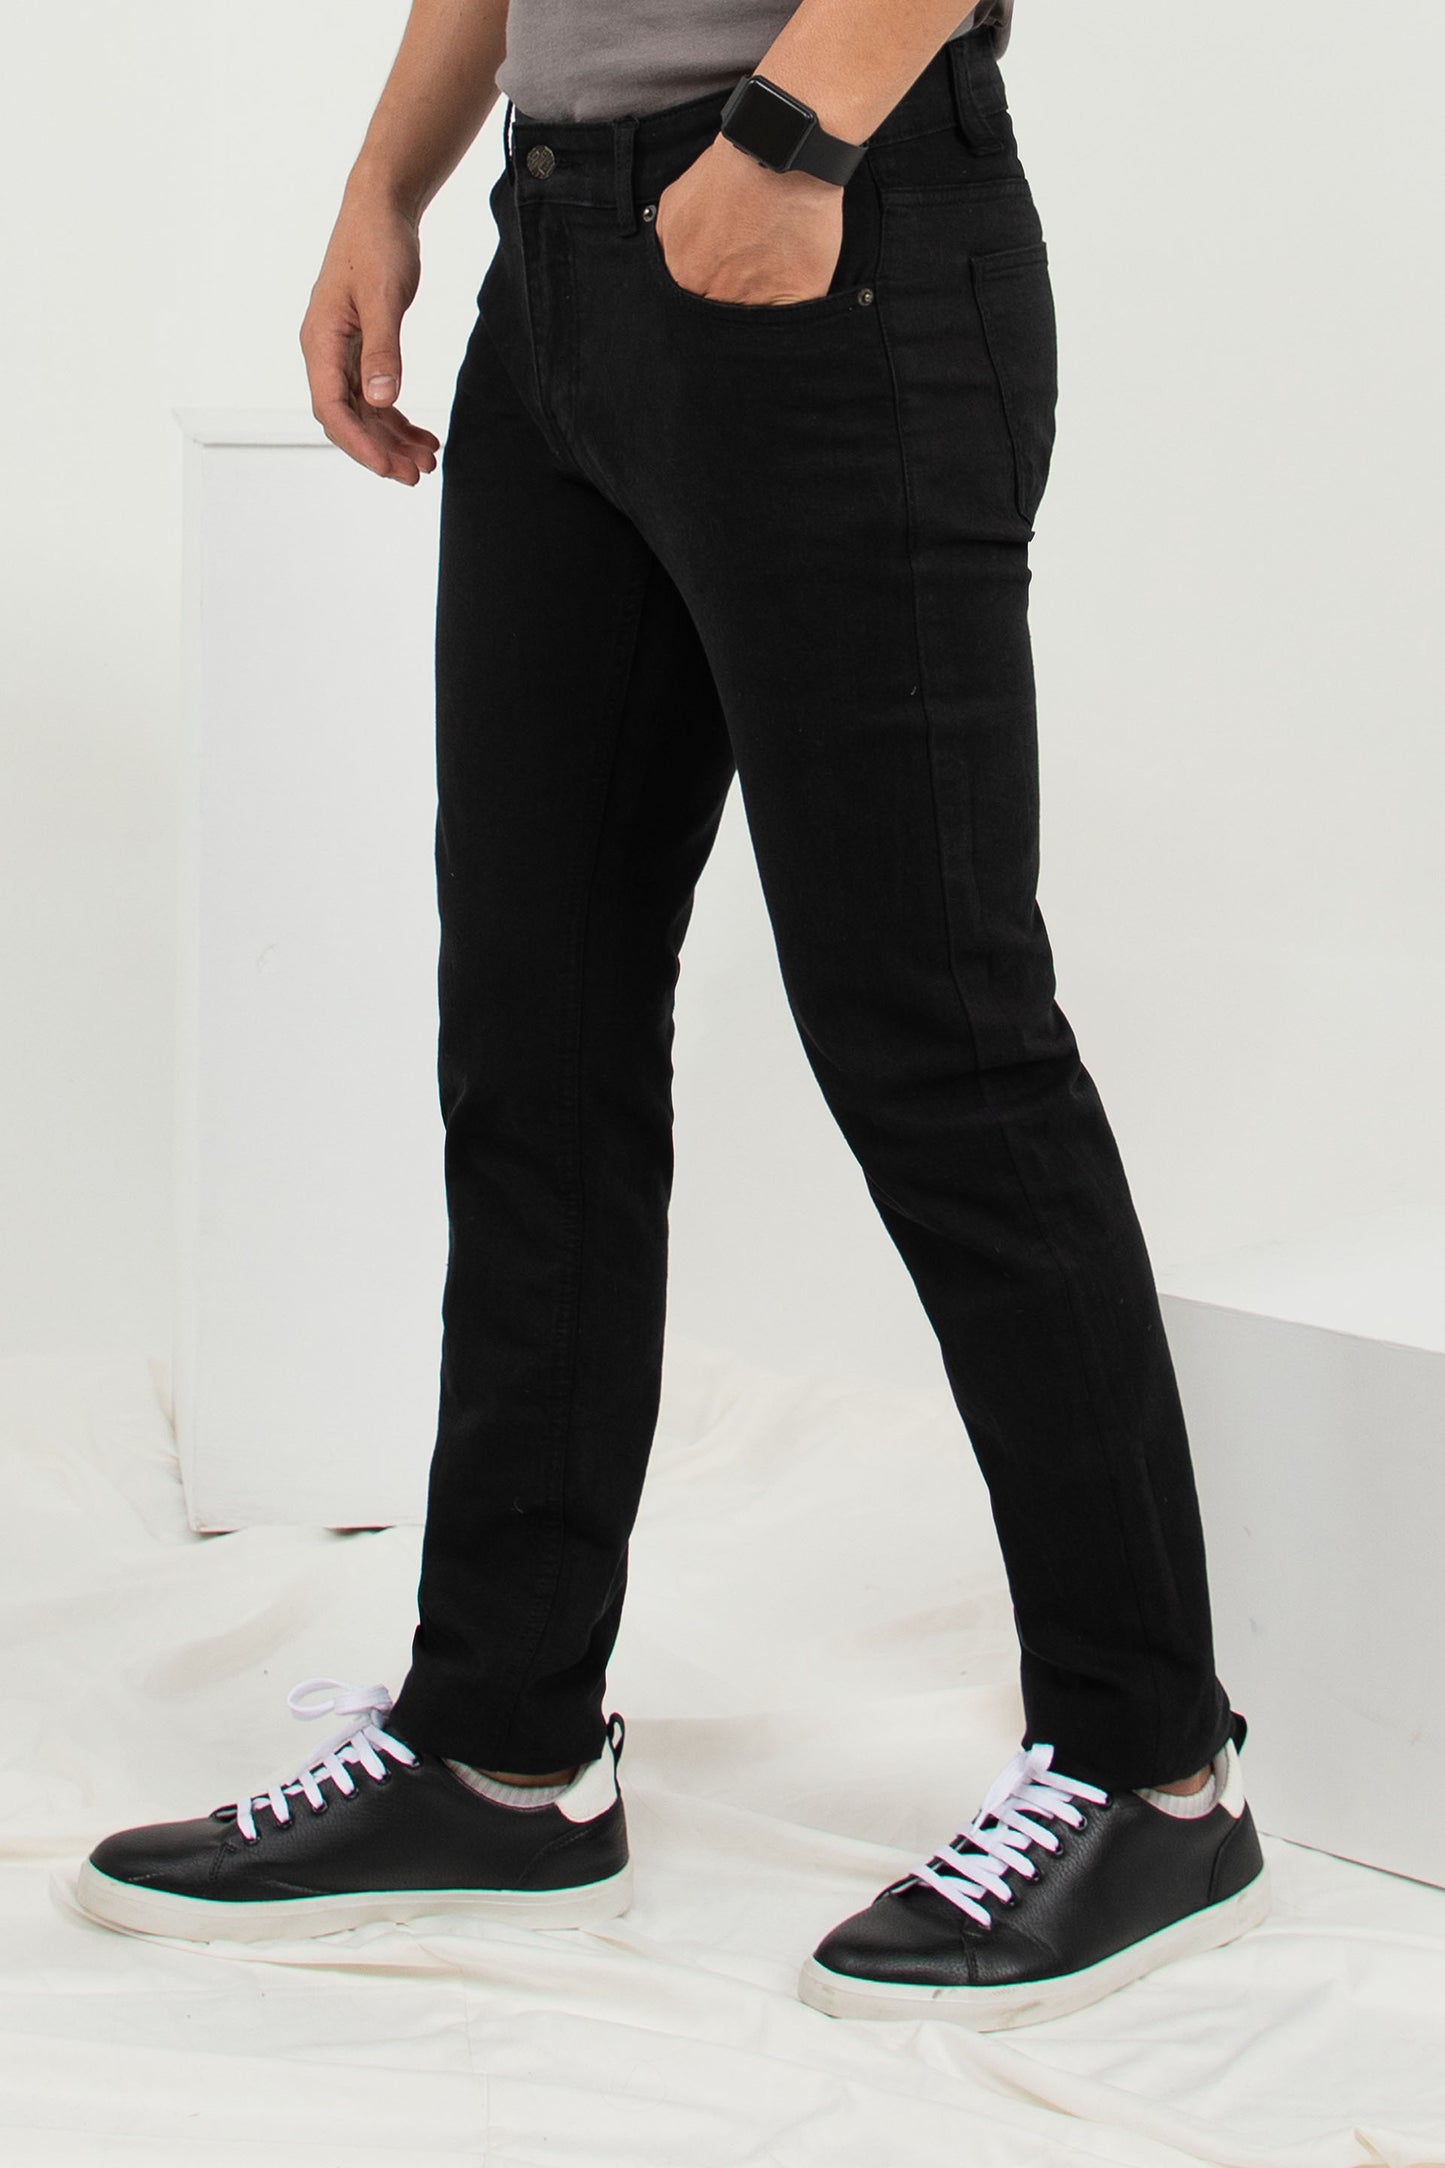 Basic Slim Jeans Black